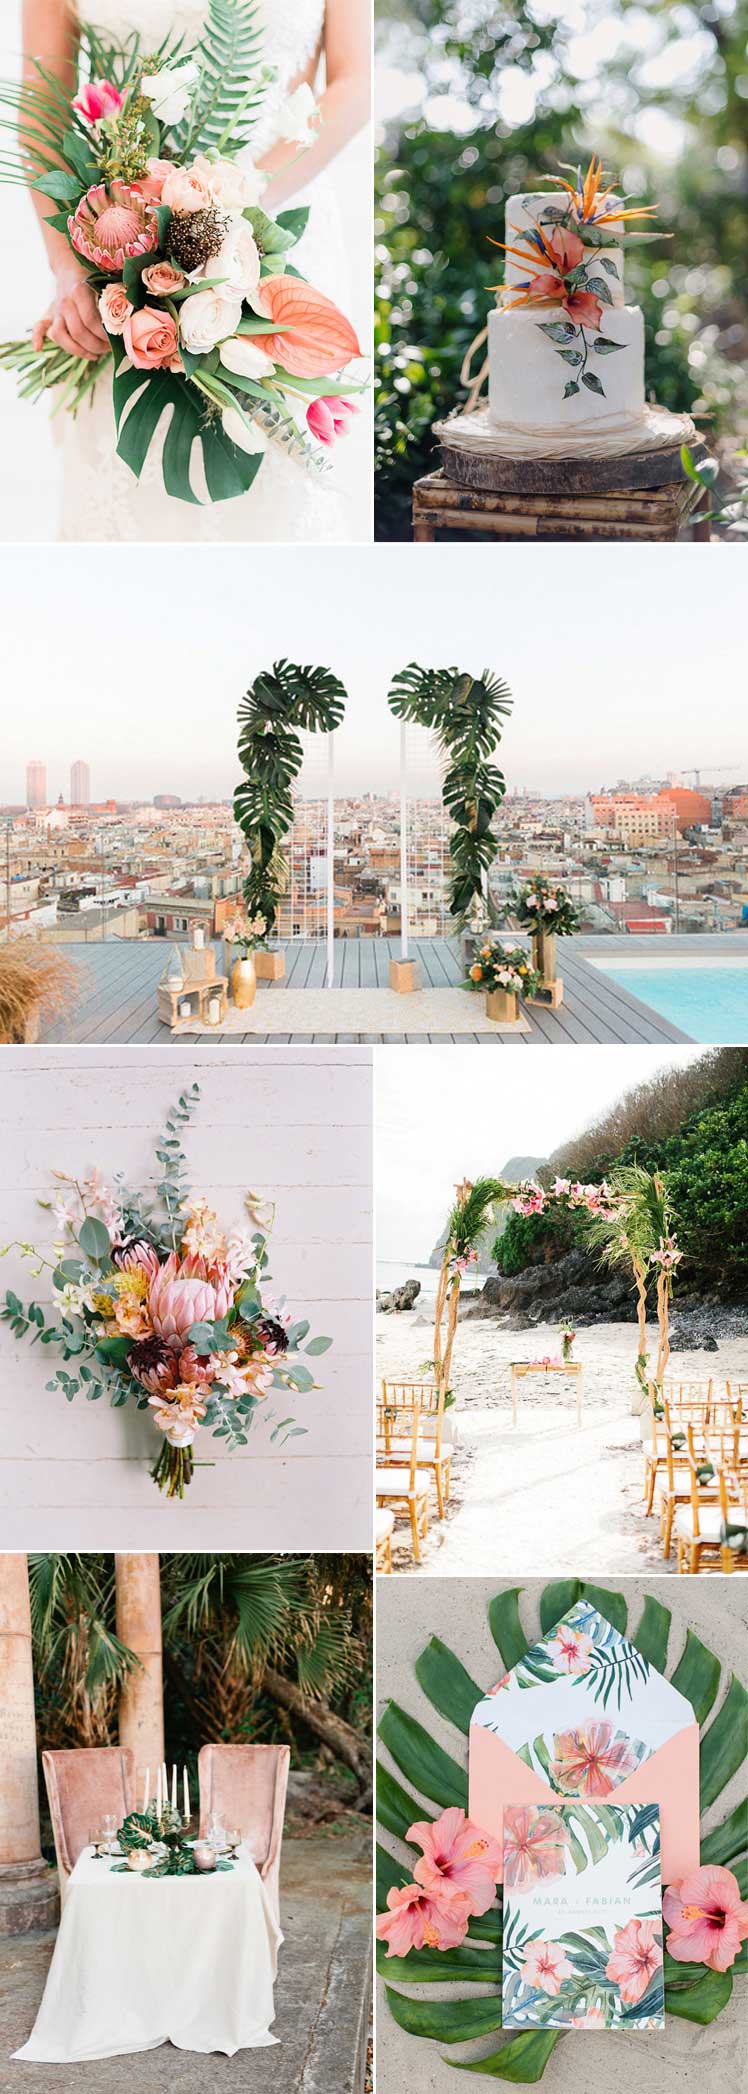 Peach and palm tree tropical wedding ideas